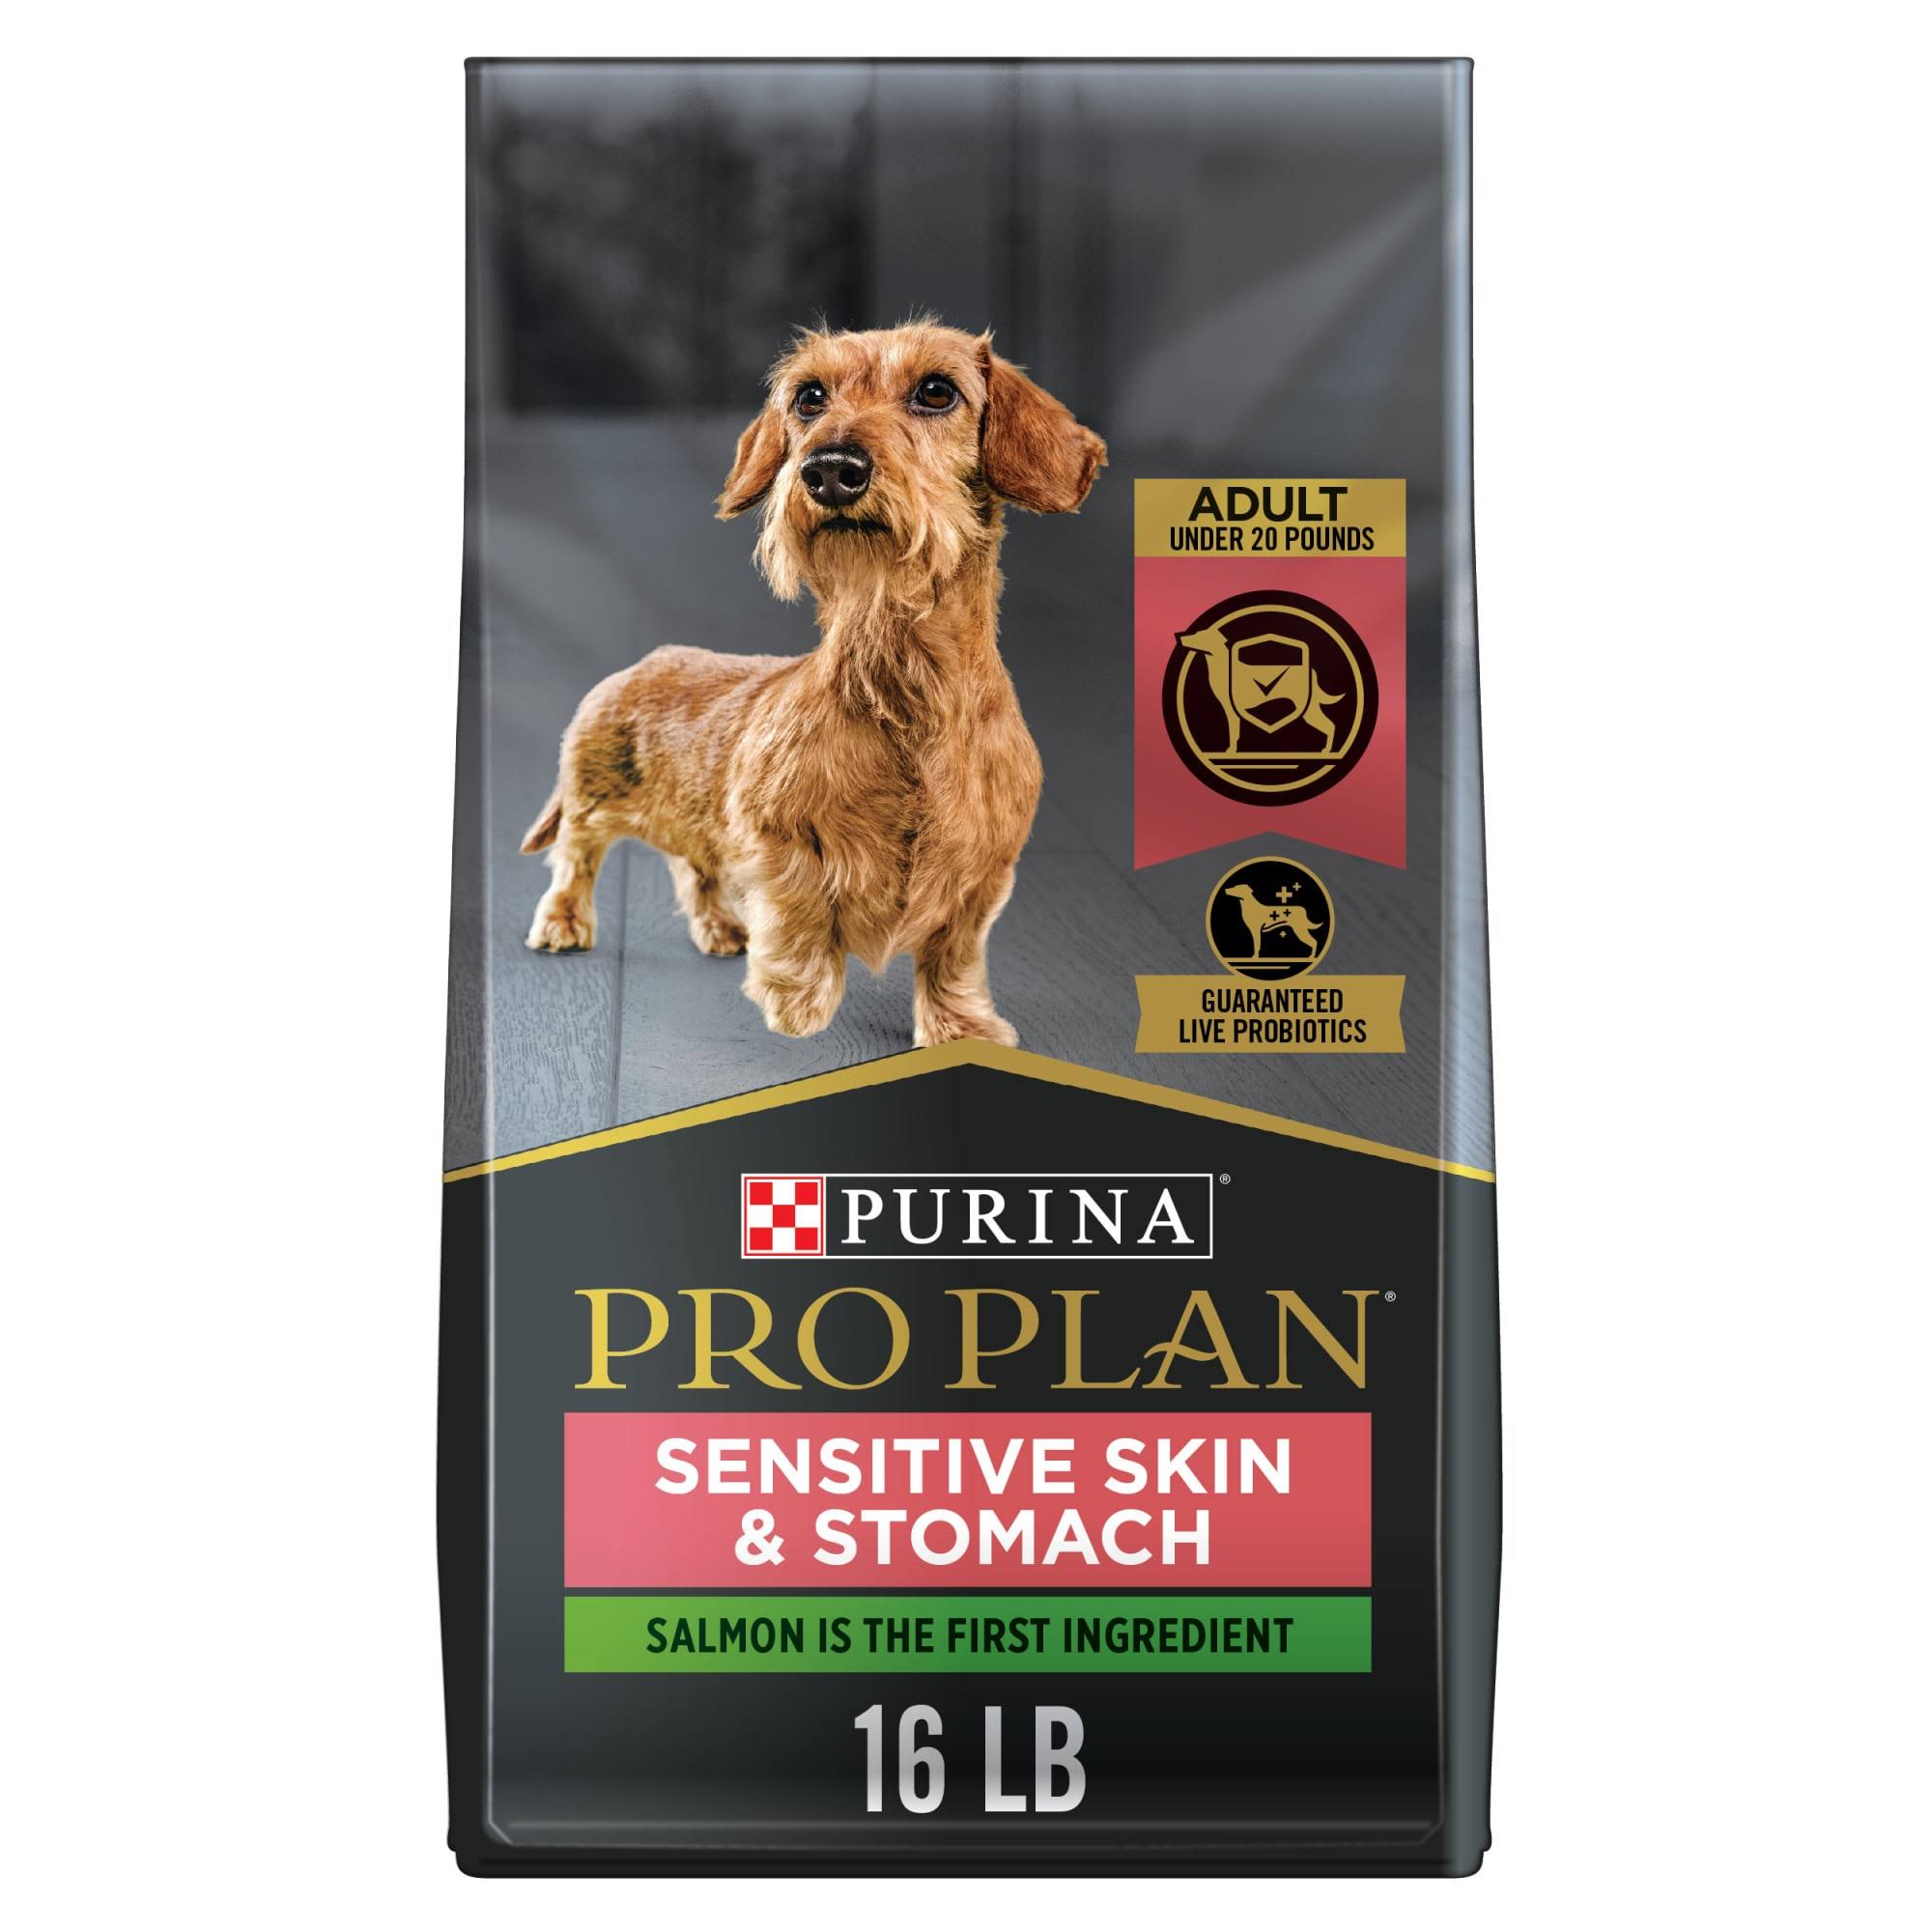 Purina Pro Plan Sensitive Skin and Sensitive Stomach Small Breed Dog Food, Salmon & Rice Formula - 16 LB Bag